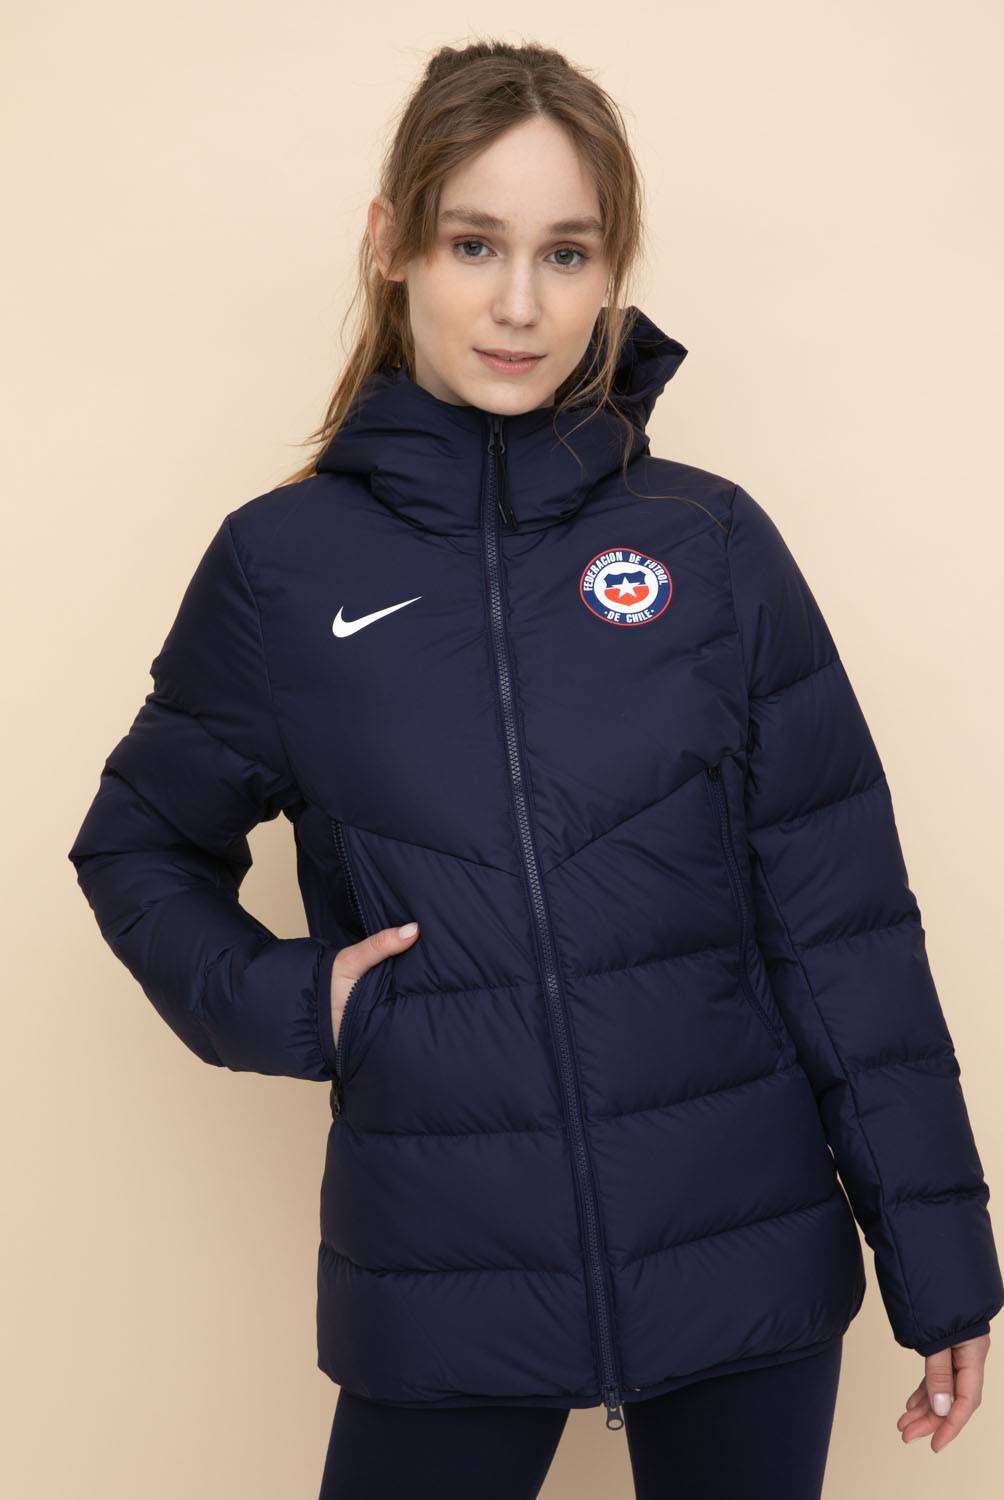 NIKE - Jacket Chile Mujer Fútbol